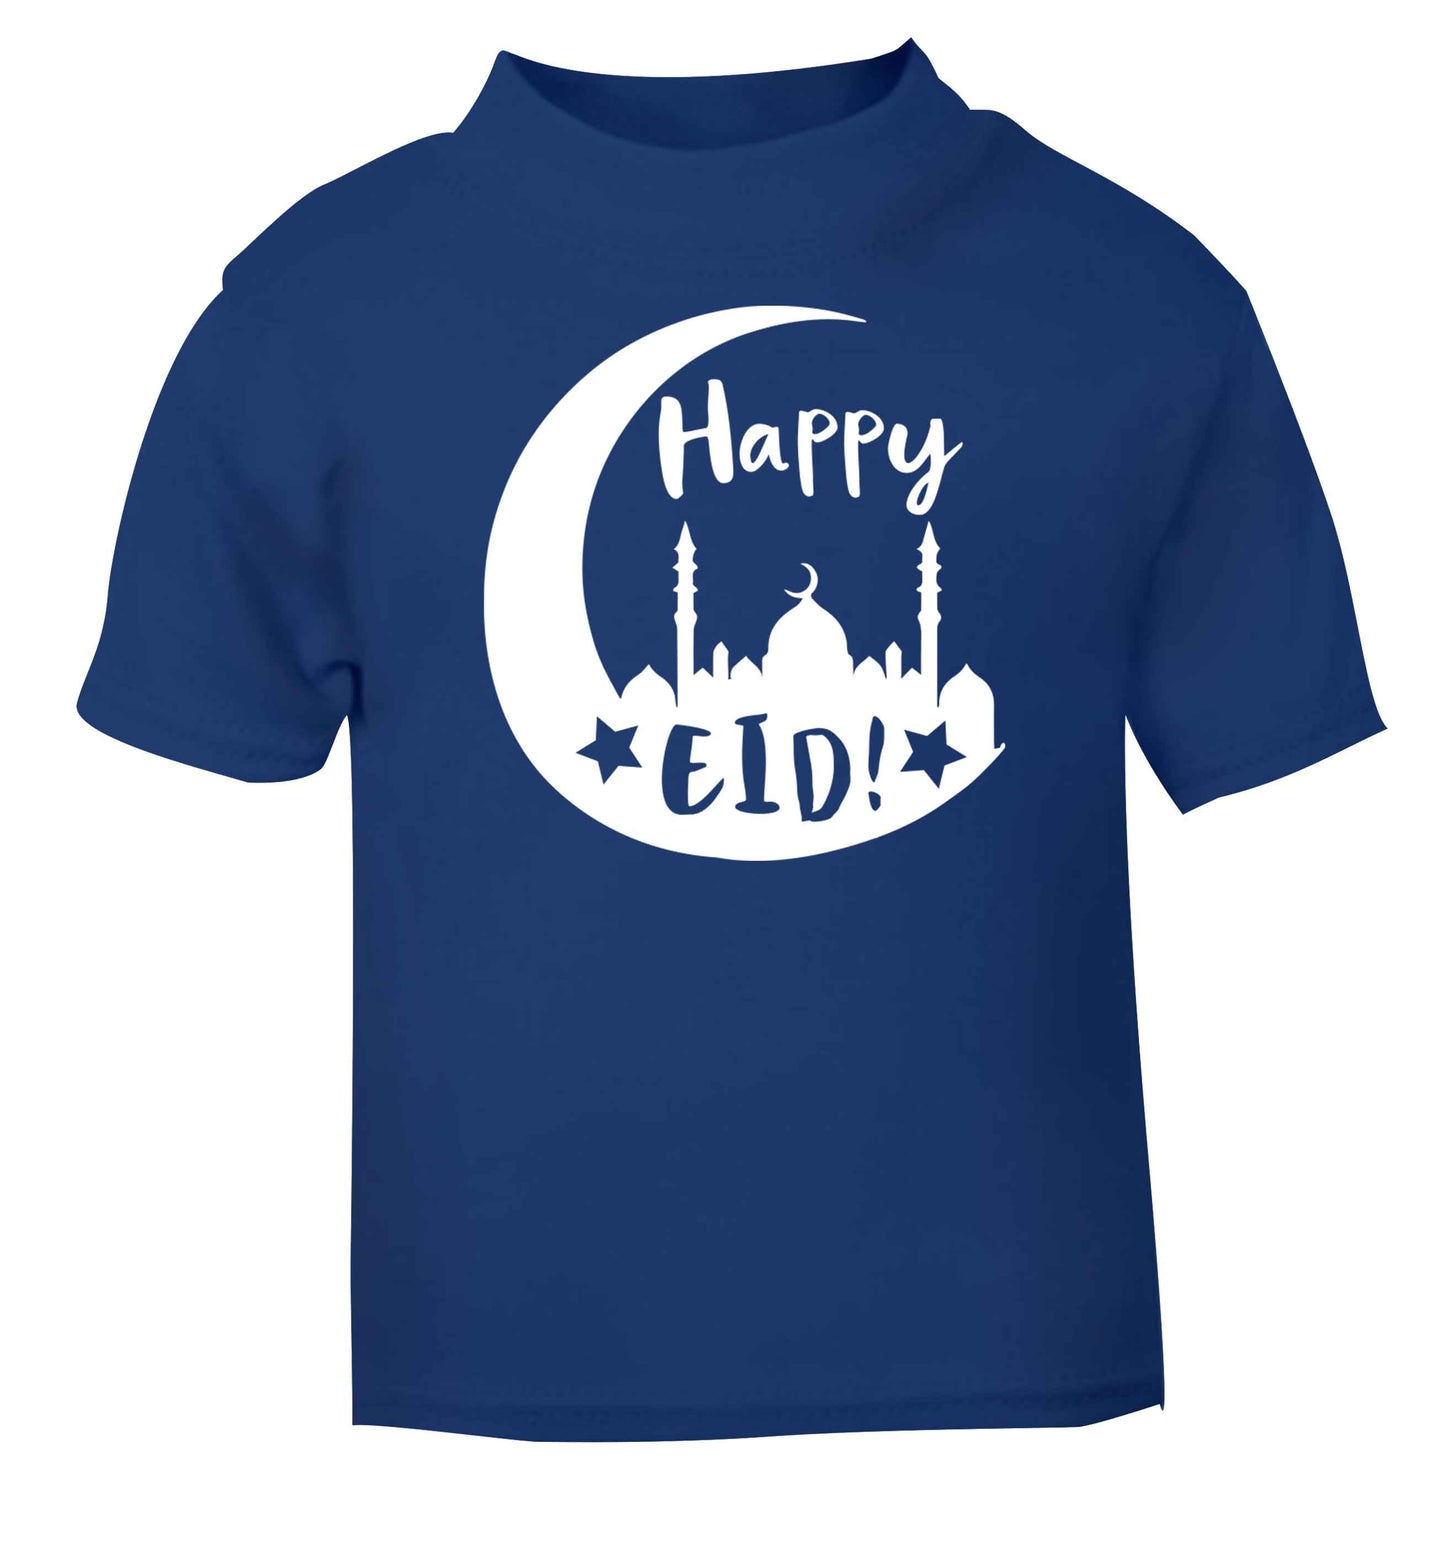 Happy Eid blue baby toddler Tshirt 2 Years